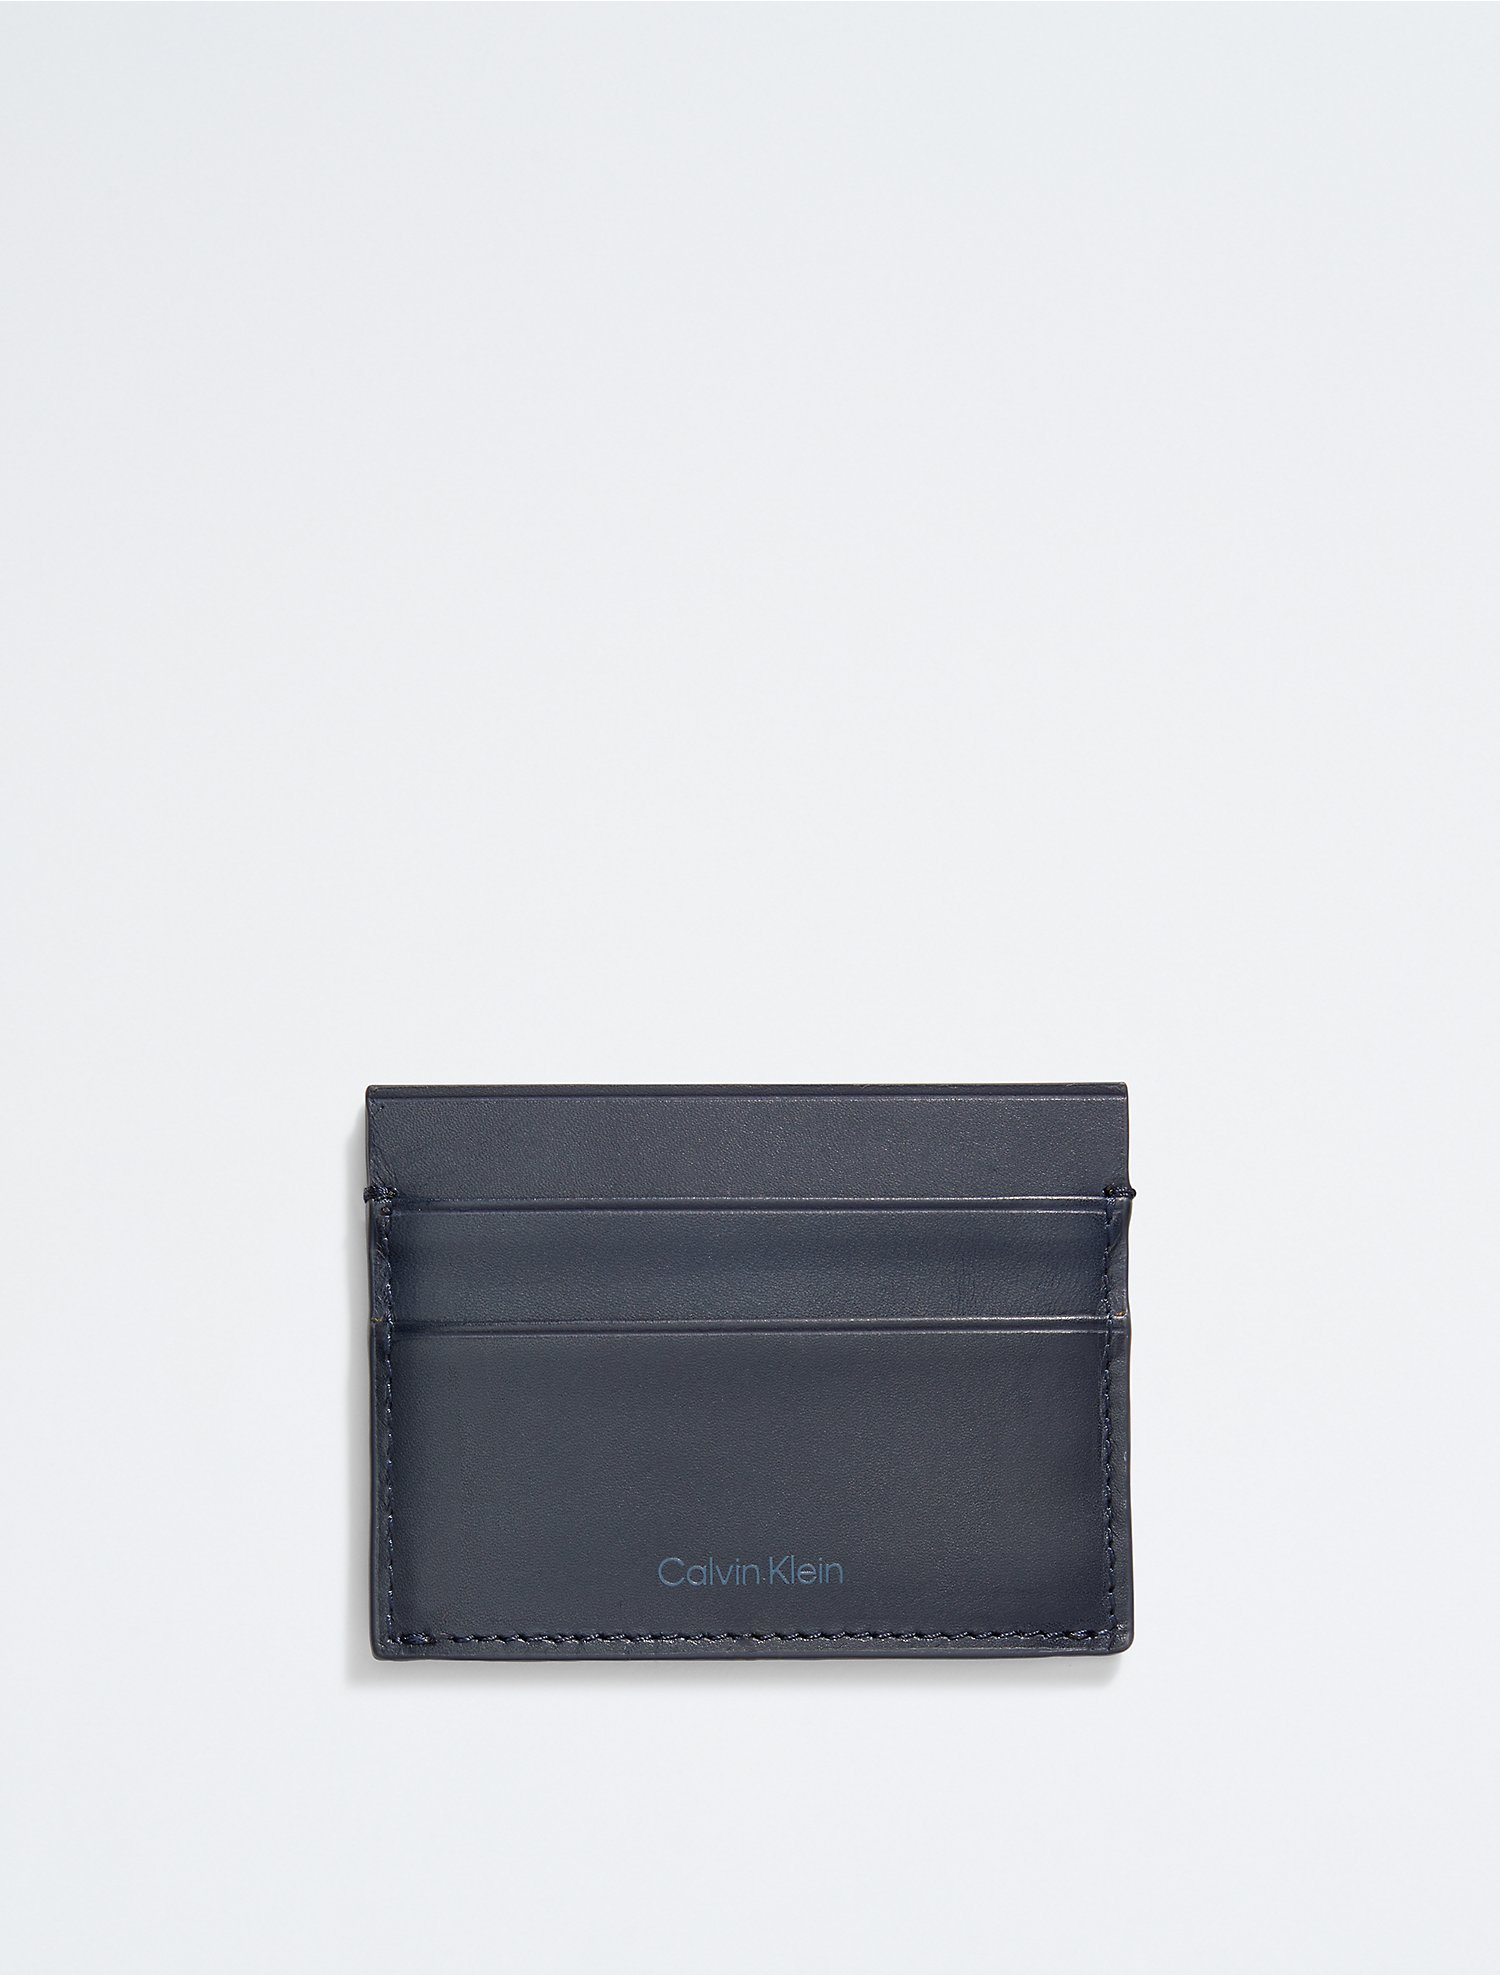 Smooth Leather Case | Klein